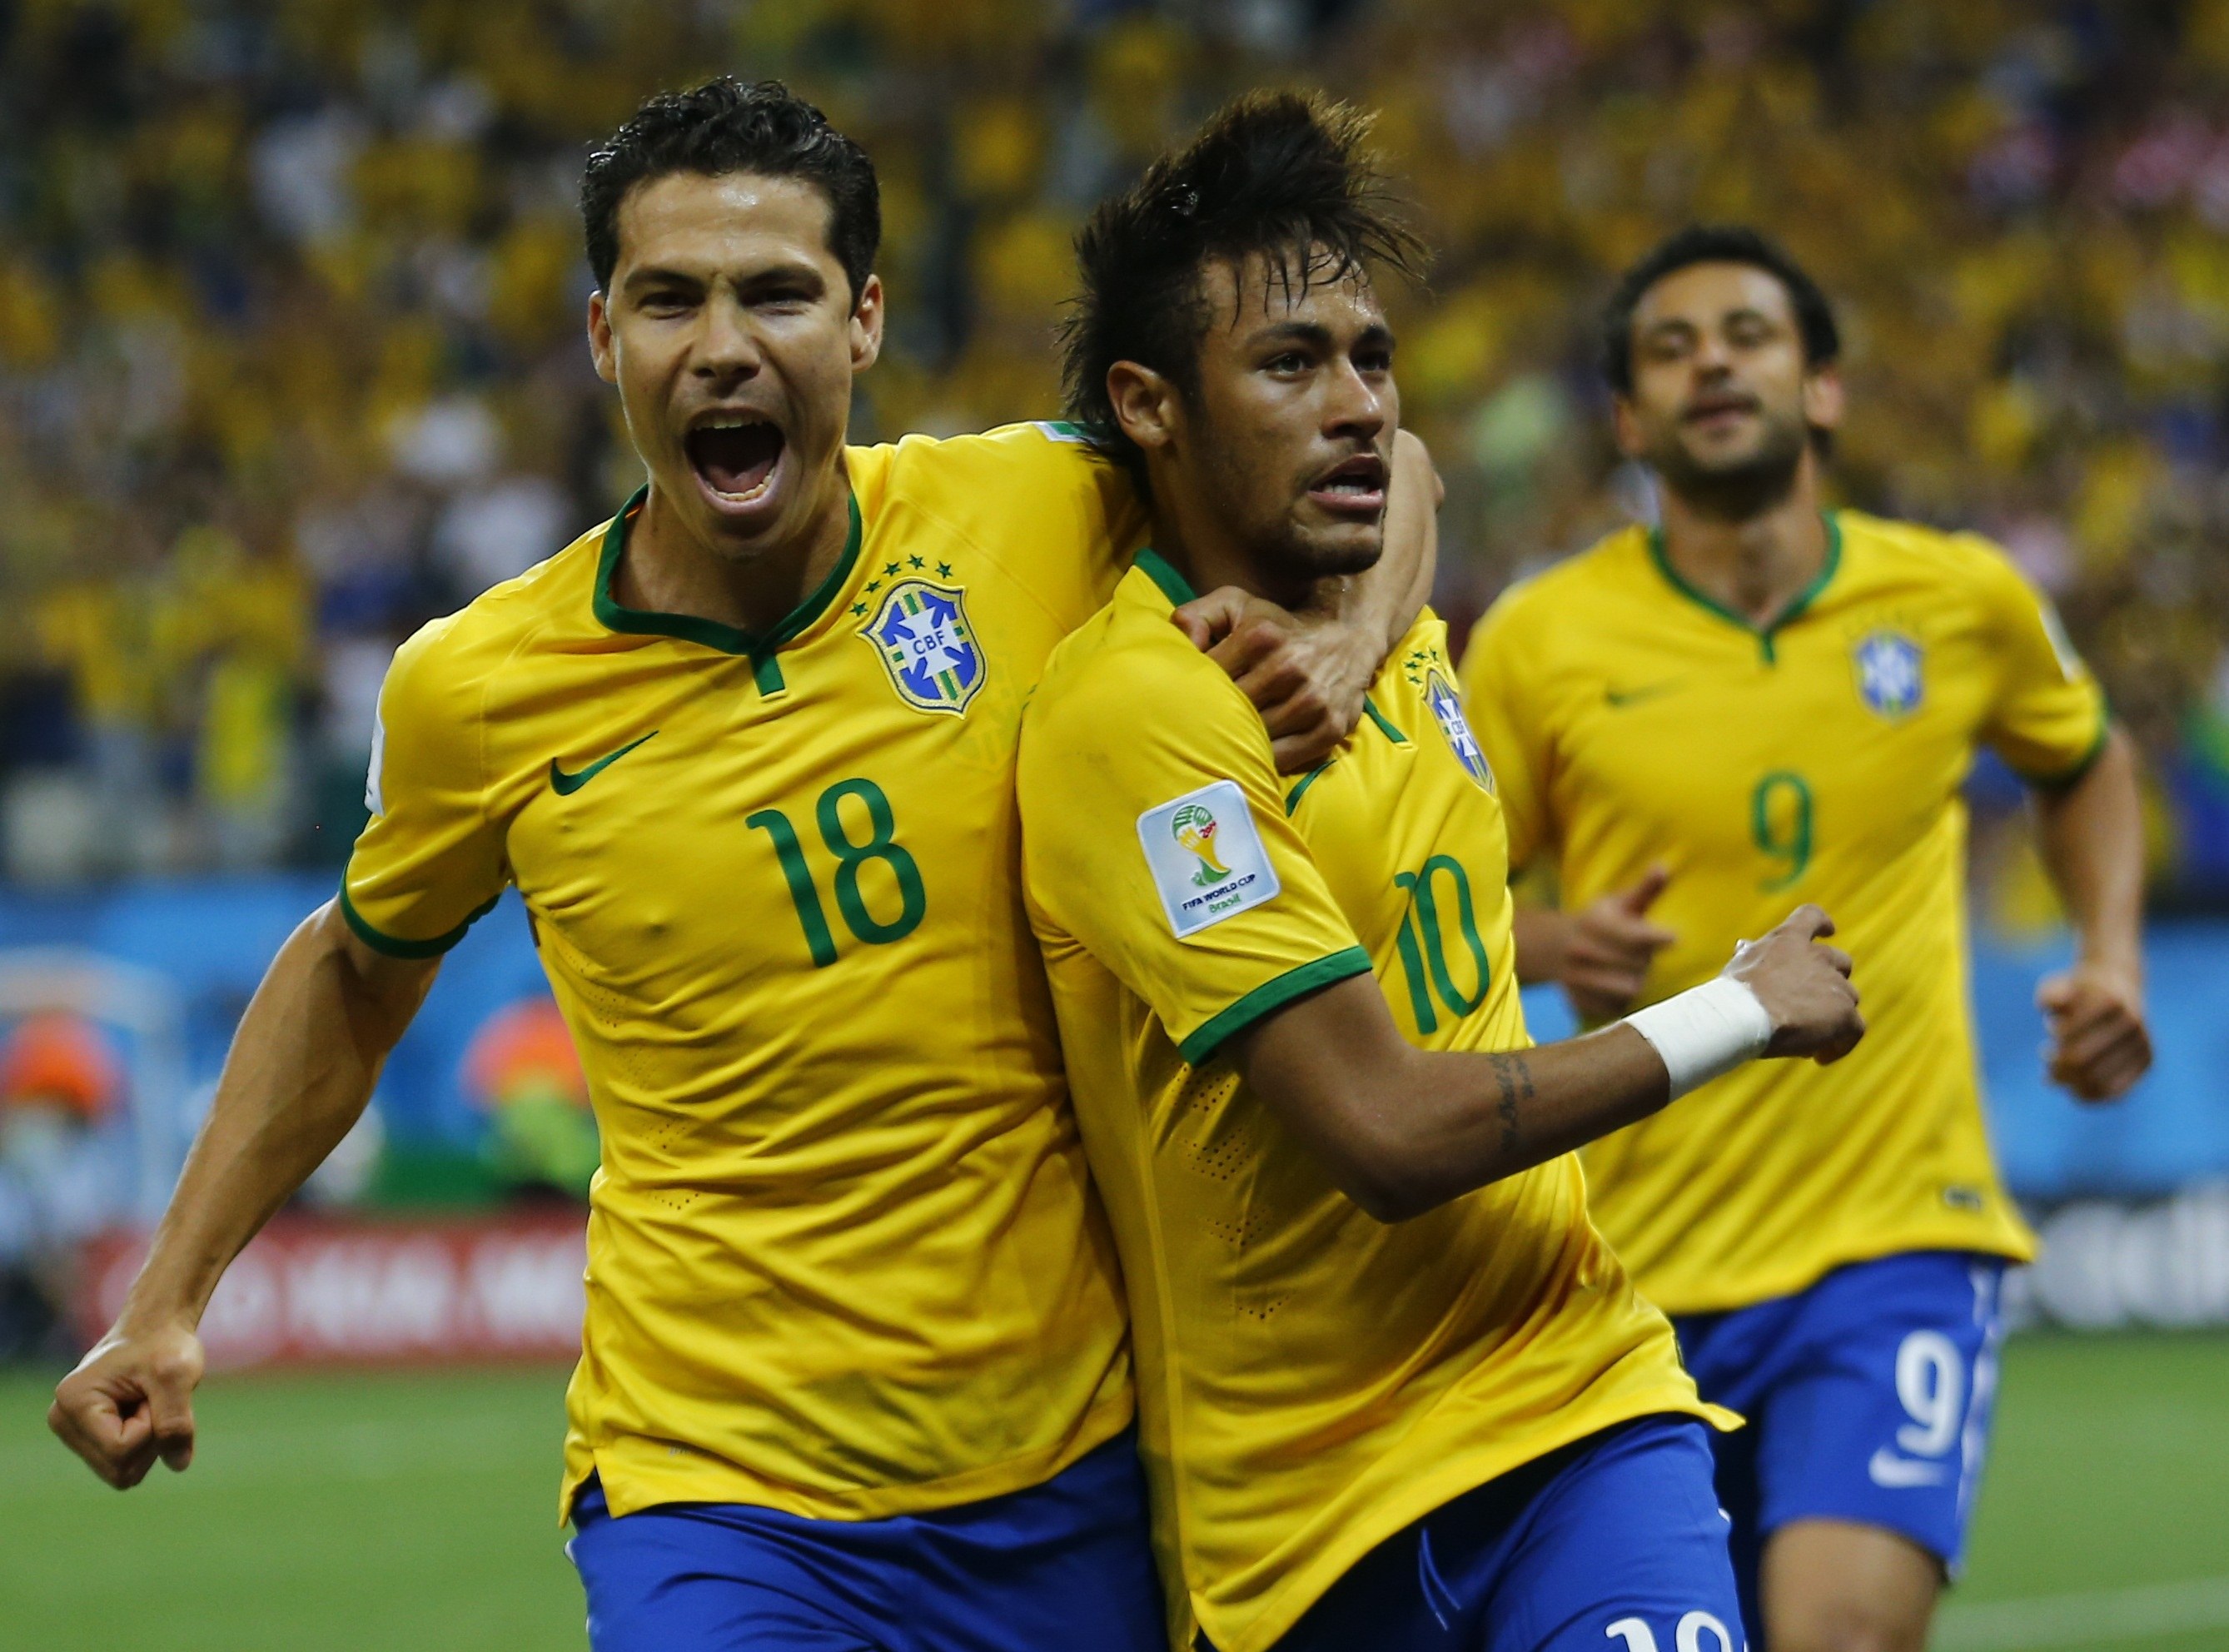 Mουντιάλ 2014: Τι είδε ο Γιαπωνέζος στο Βραζιλία – Κροατία (3-1);